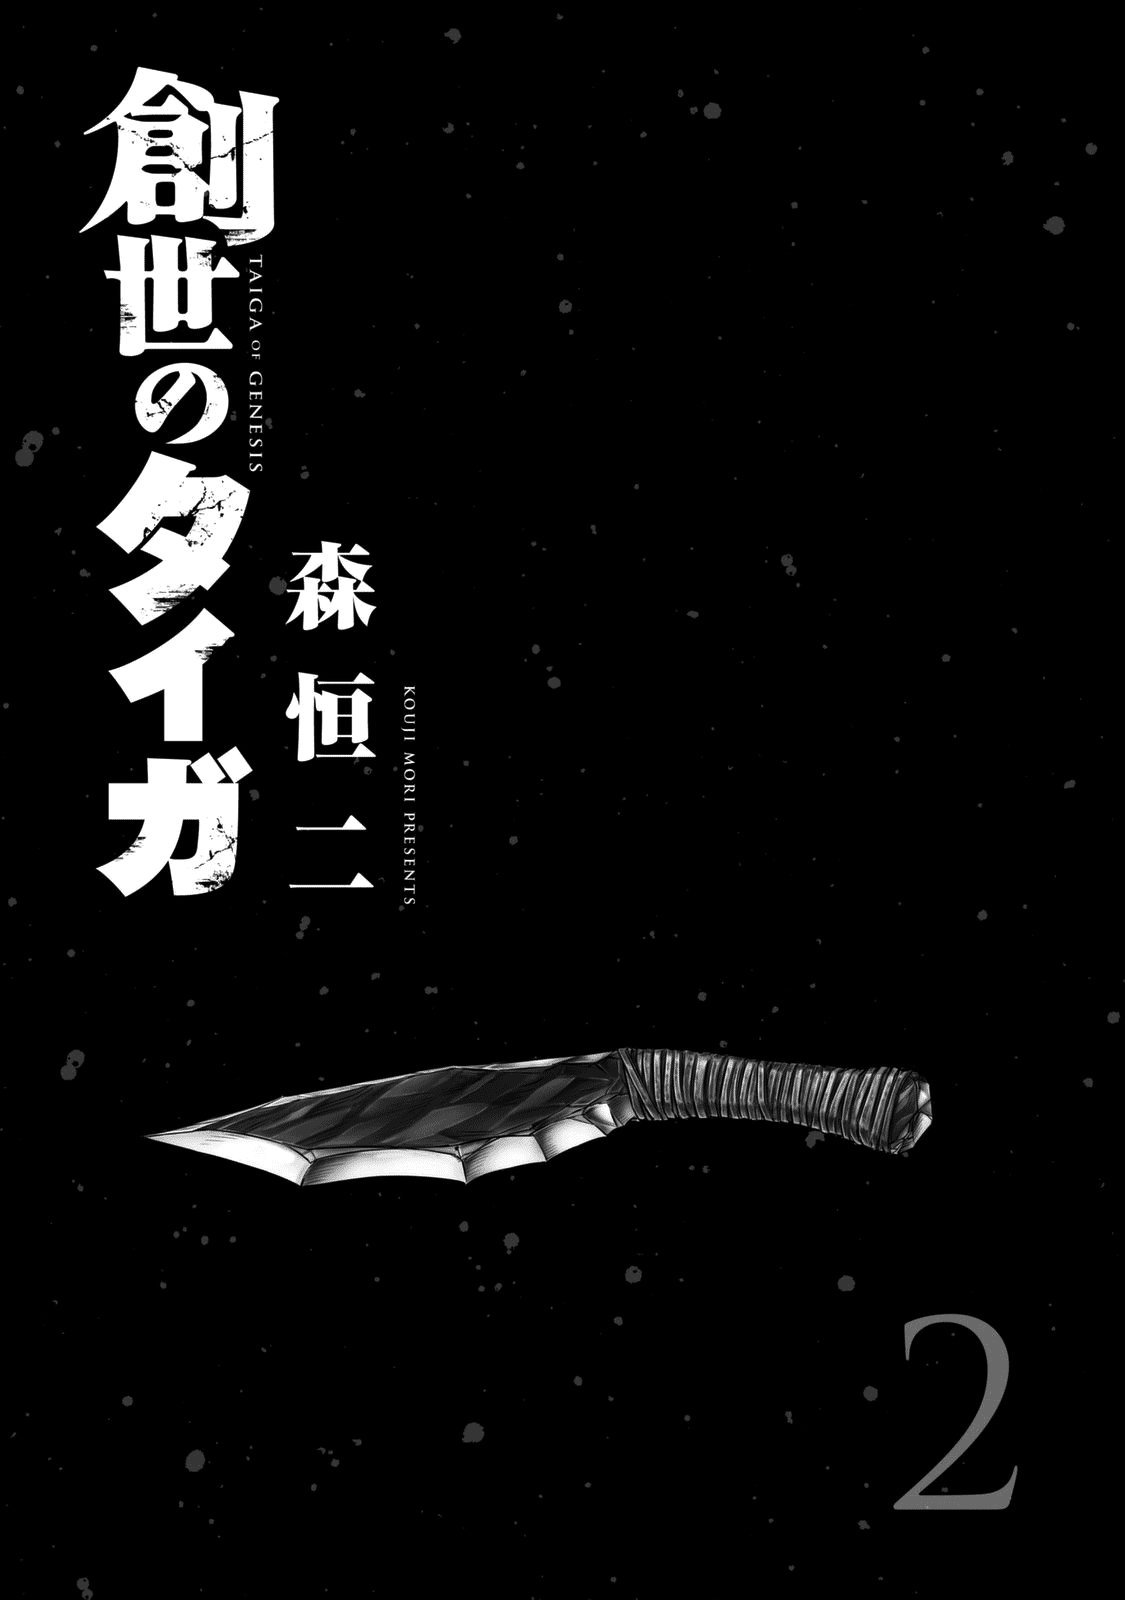 Sousei no Taiga Vol. 2 Ch. 10 Era of Giant Beasts